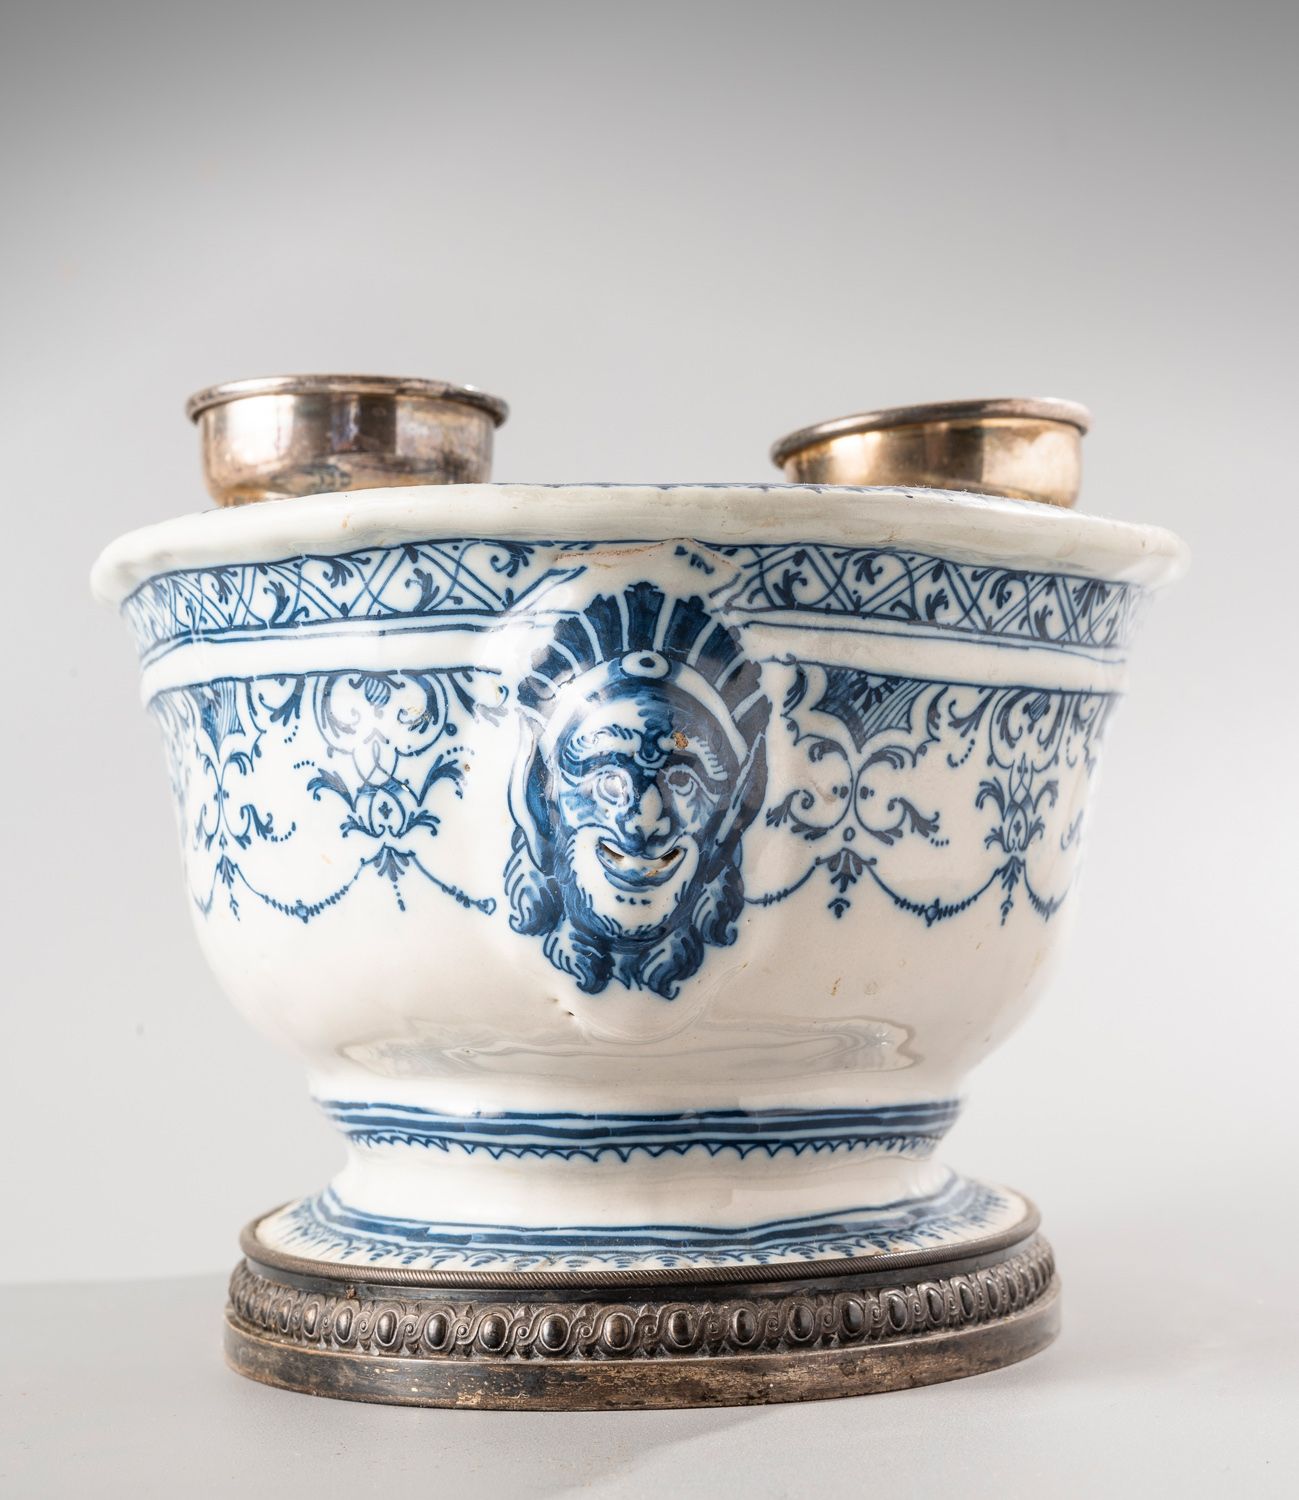 Null 搬家公司

蓝色单色装饰的椭圆陶器油架

的羔羊皮和花环。

18世纪。

L. 26 cm.

Rissler et Carré的镀银金属框架。